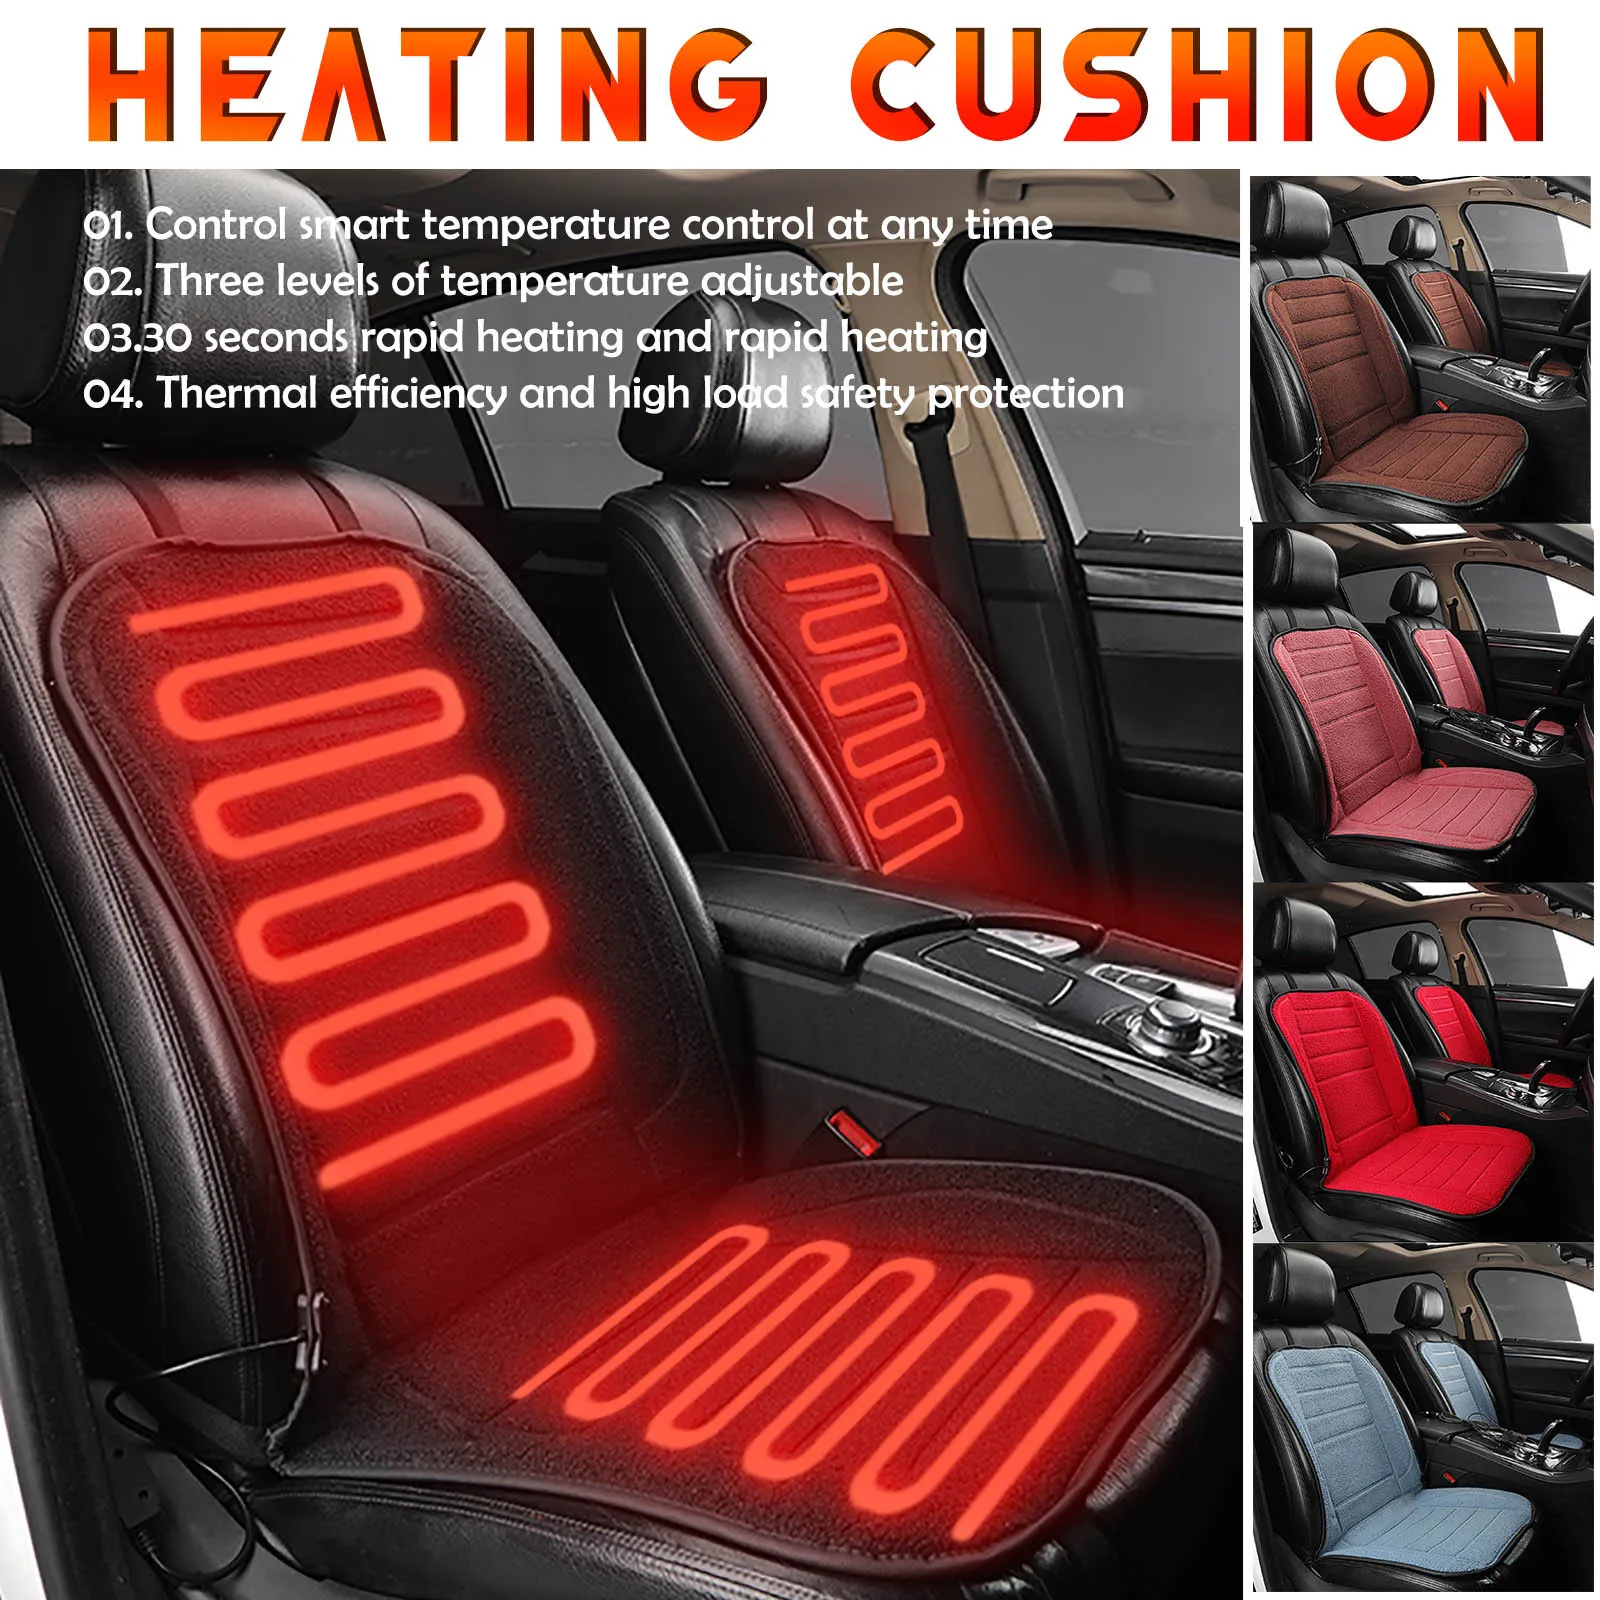 Eariy Smart Heated Car Seat Cushion,12 V Car Truck Lambs Wool Heated Seat Cover,Universal Heating Seat Pad with Three Temperature Adjustable Black 